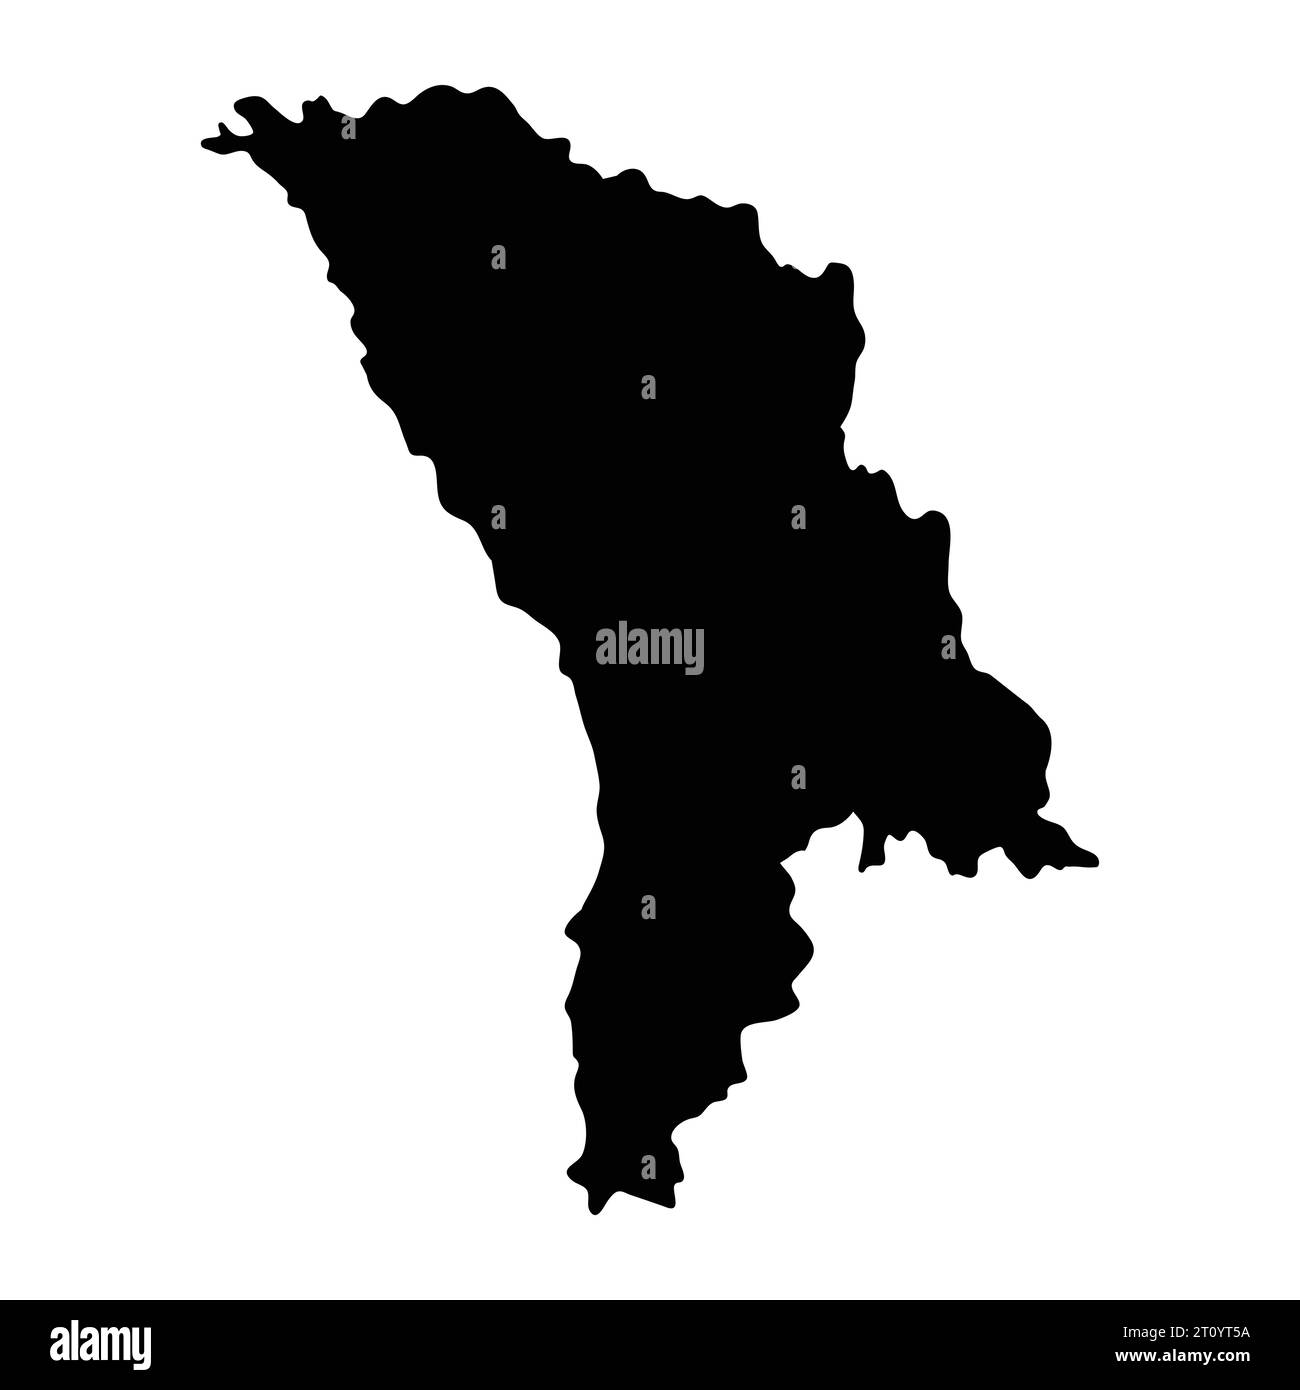 Moldova island map silhouette region territory, black shape style illustration Stock Vector